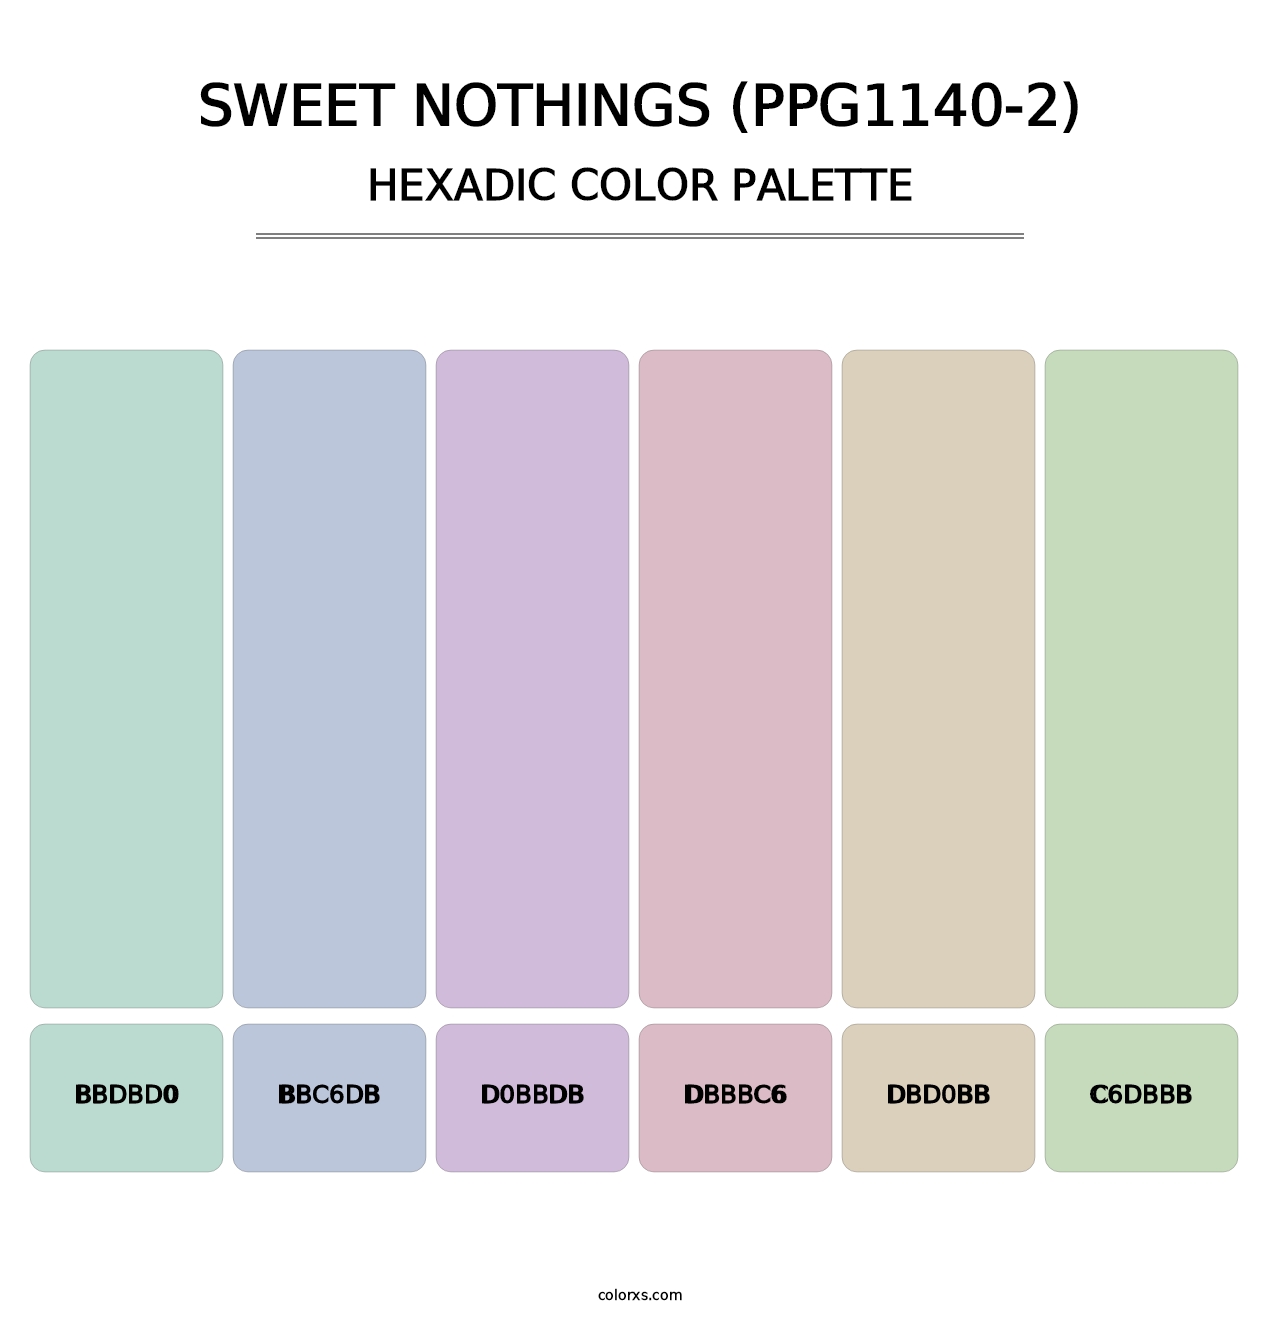 Sweet Nothings (PPG1140-2) - Hexadic Color Palette